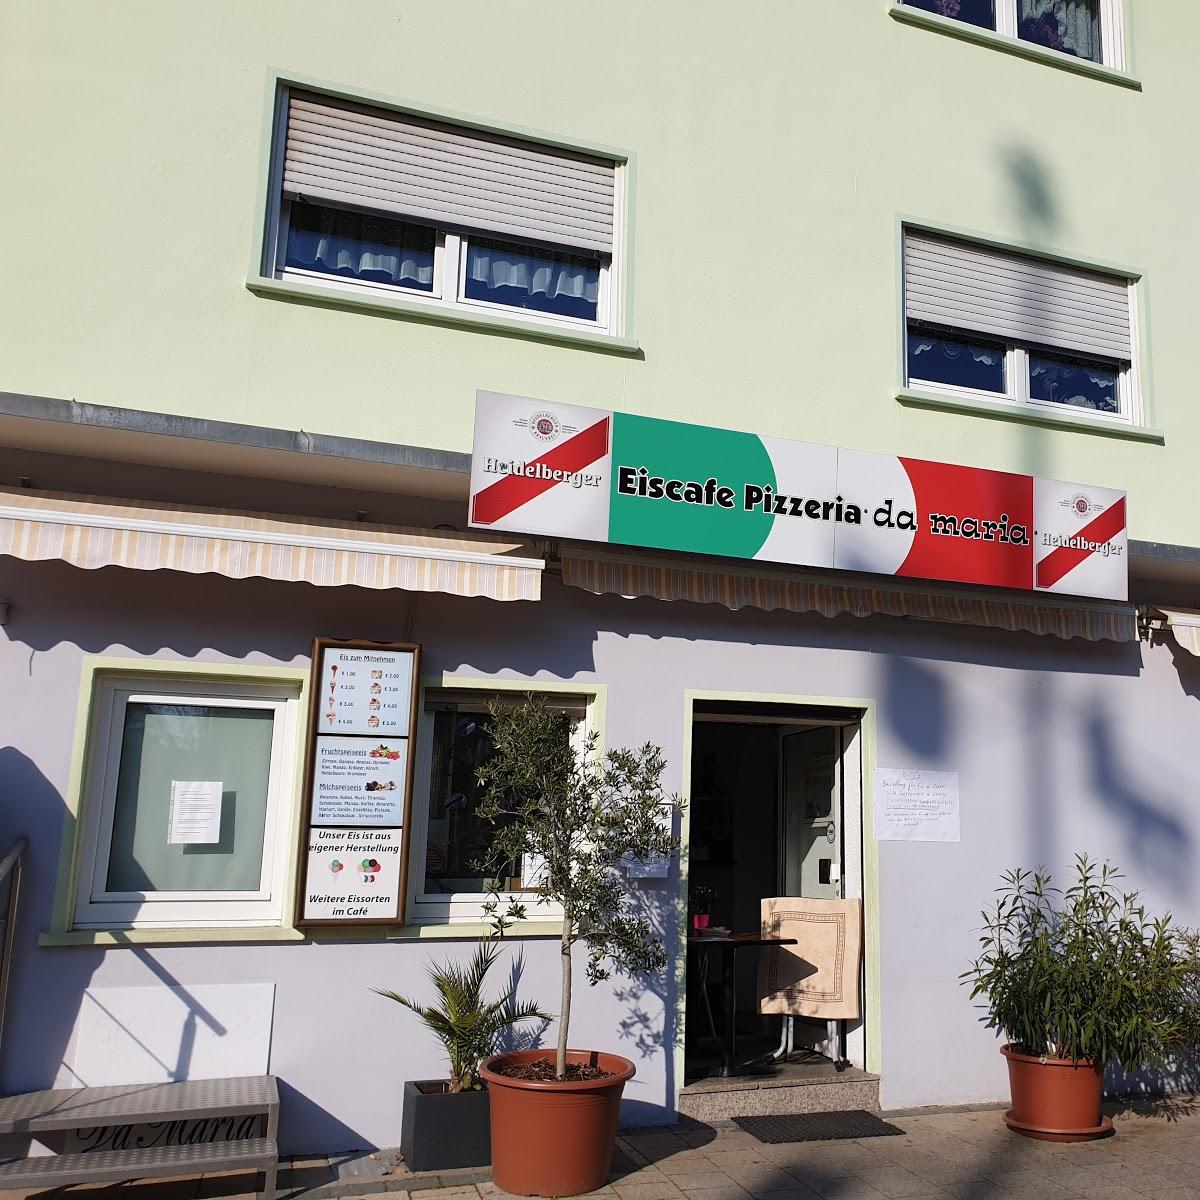 Restaurant "Eiscafé Pizzeria da Maria" in  Meckesheim